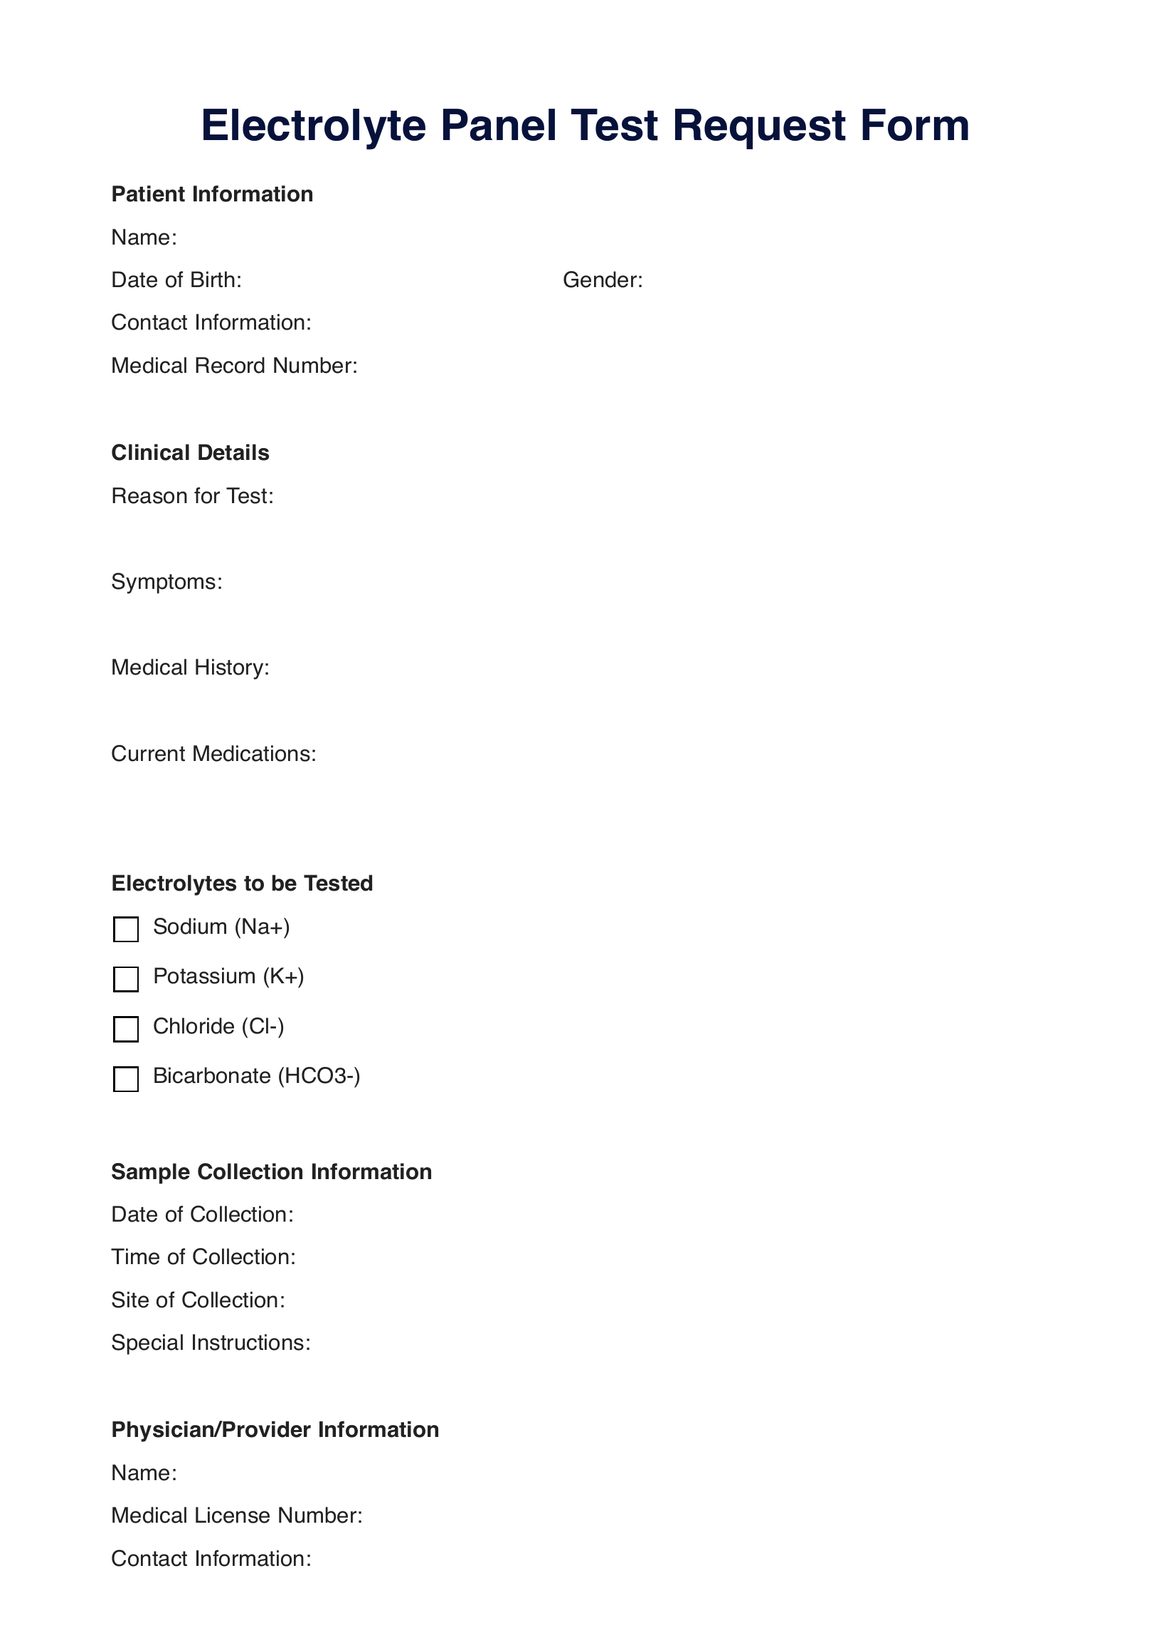 Electrolyte Panel PDF Example